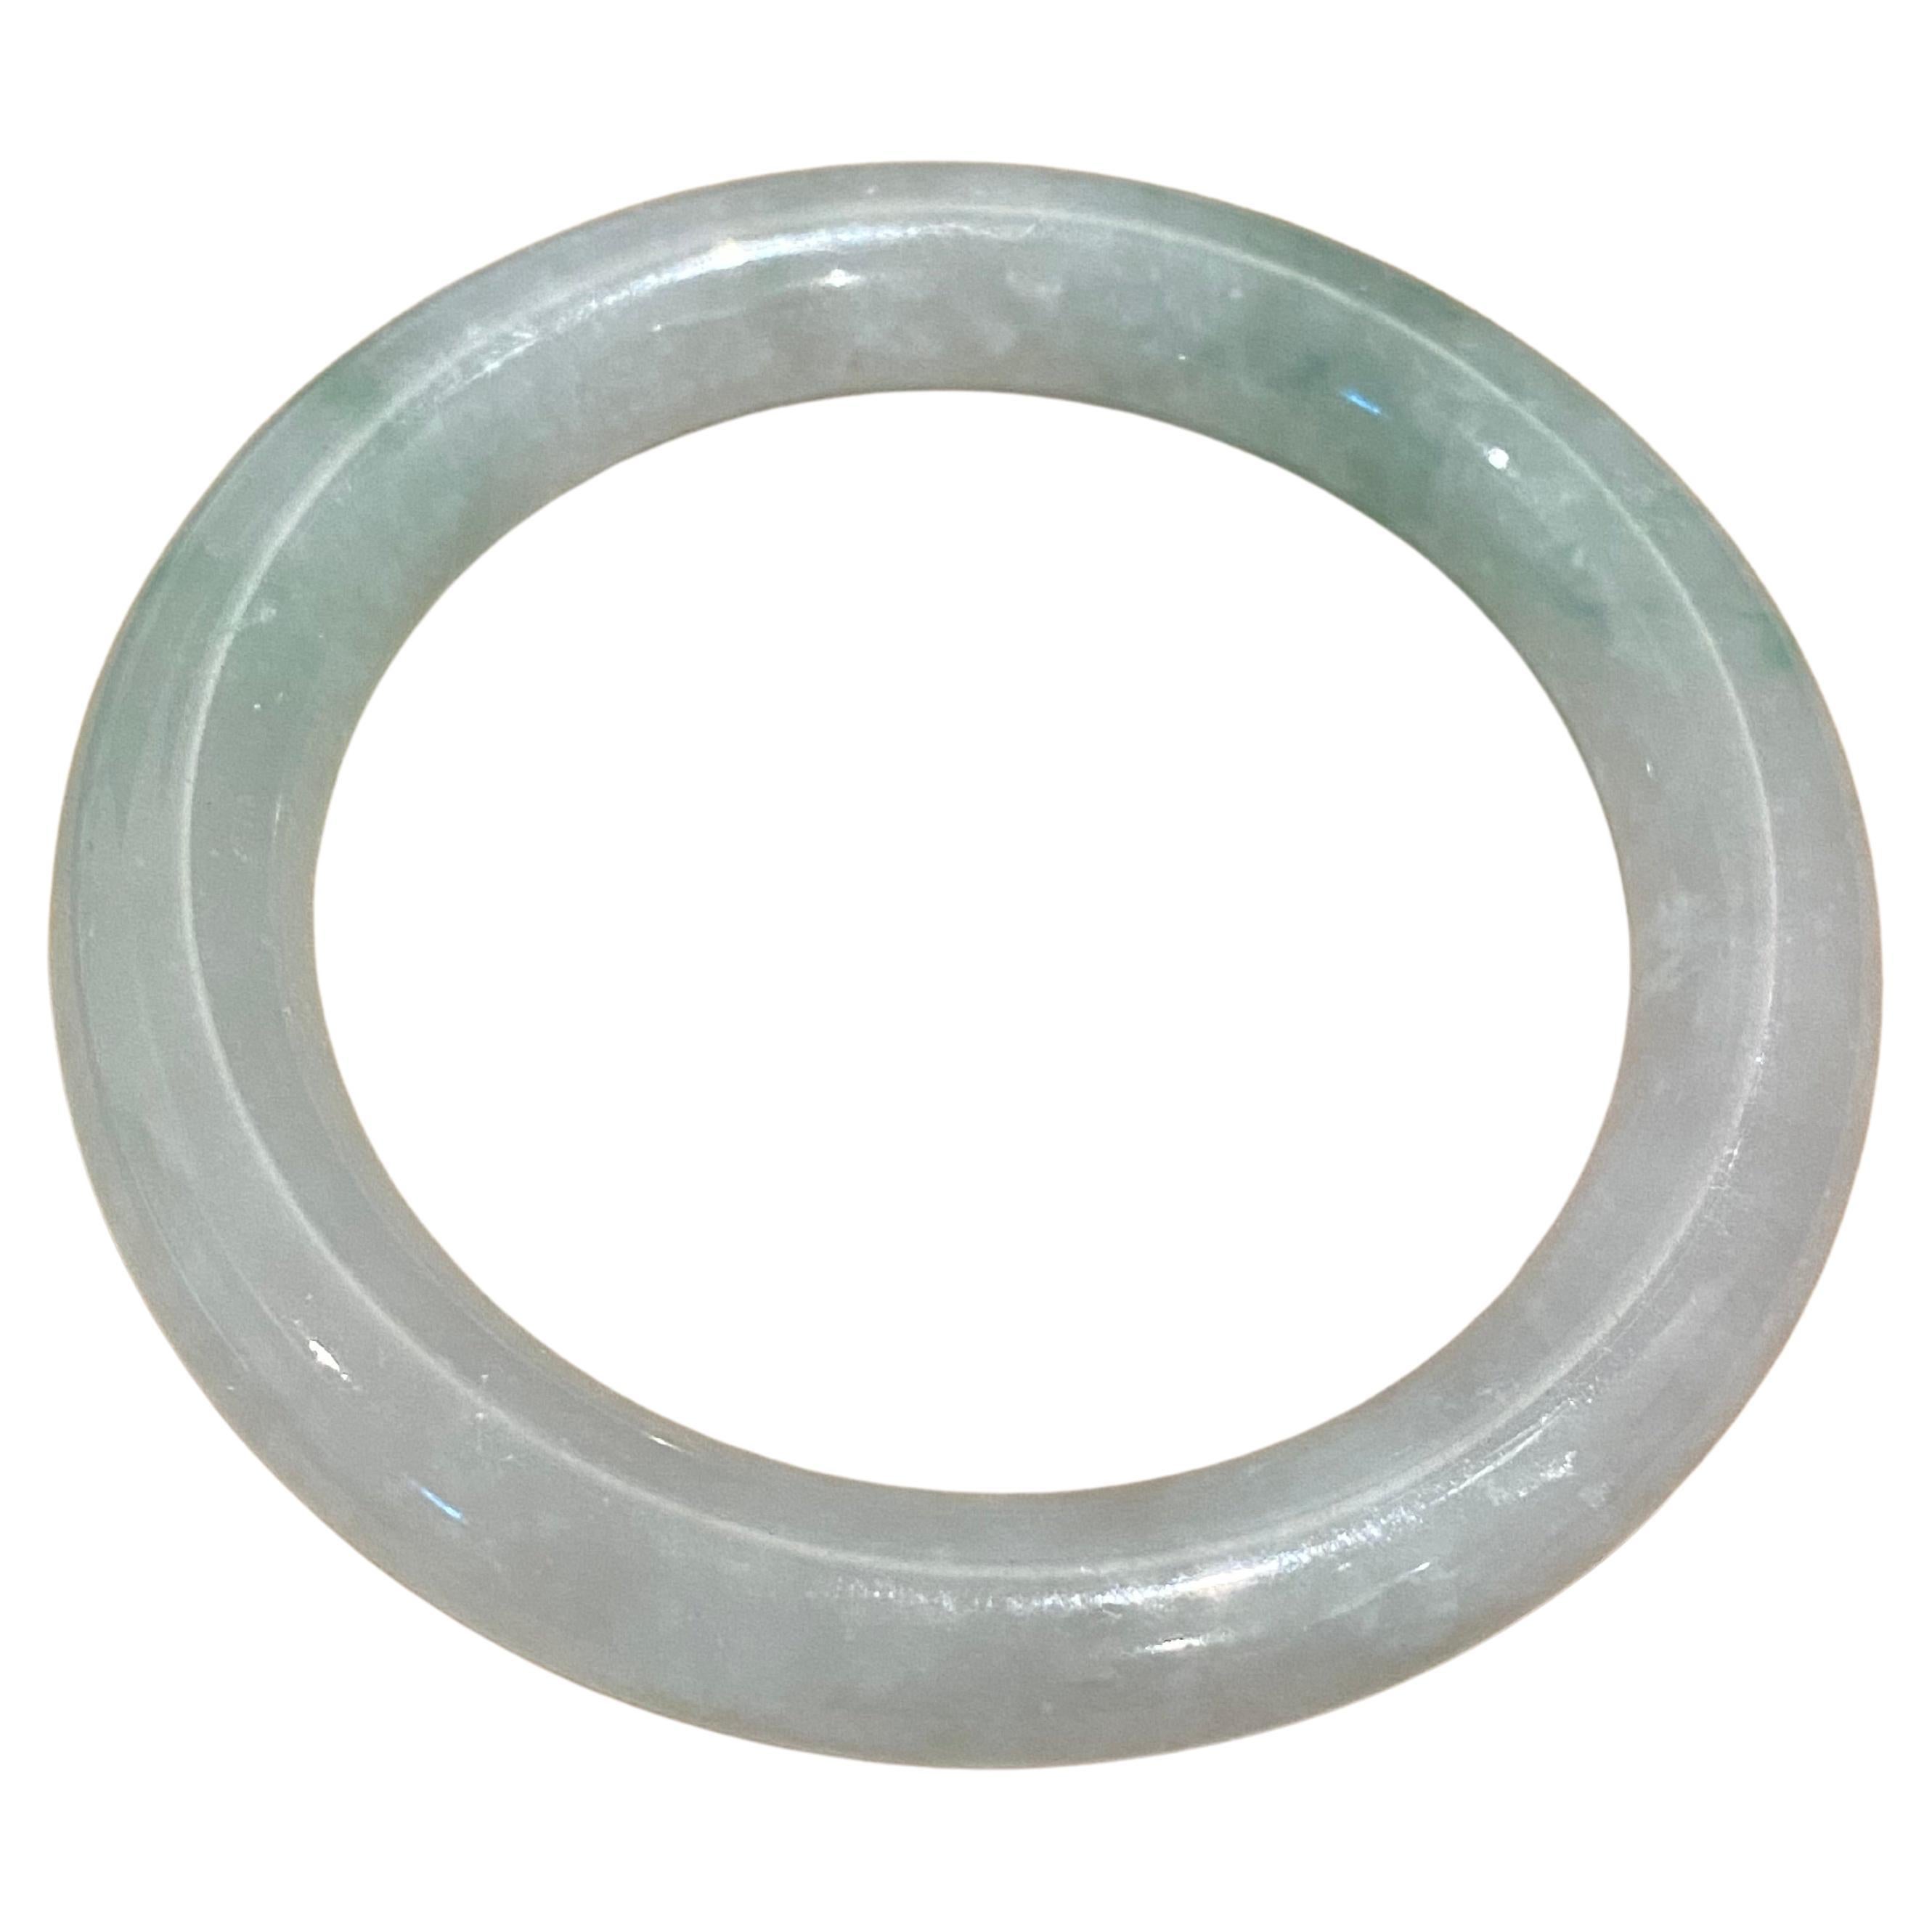 Type A Jadeit-Armreif, grau-grüne Farbe, 59.7 g, 21 cm, Durchmesser 55 mm.